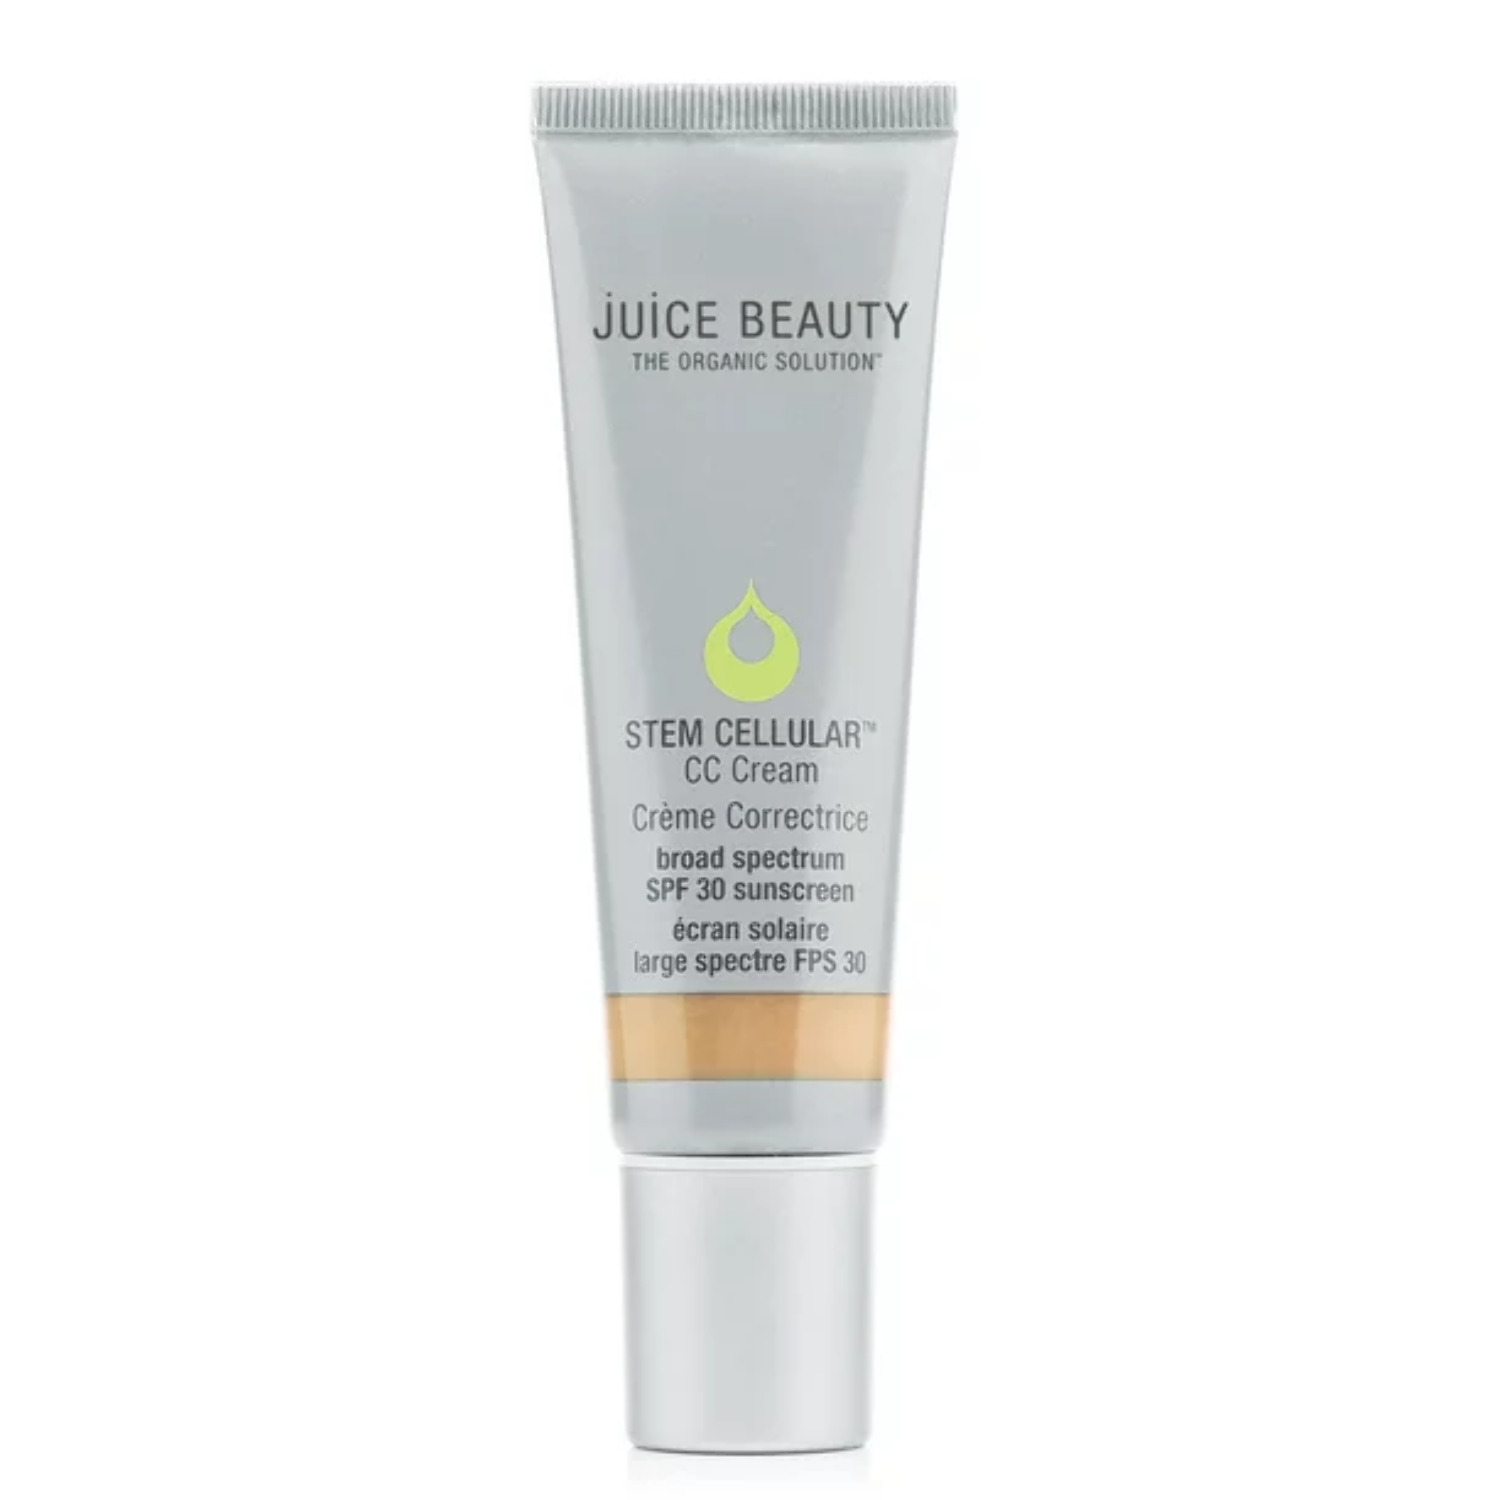 Juice Beauty Stem Cellular CC Cream SPF 30 Beach Glow 1.7oz - image 2 of 3